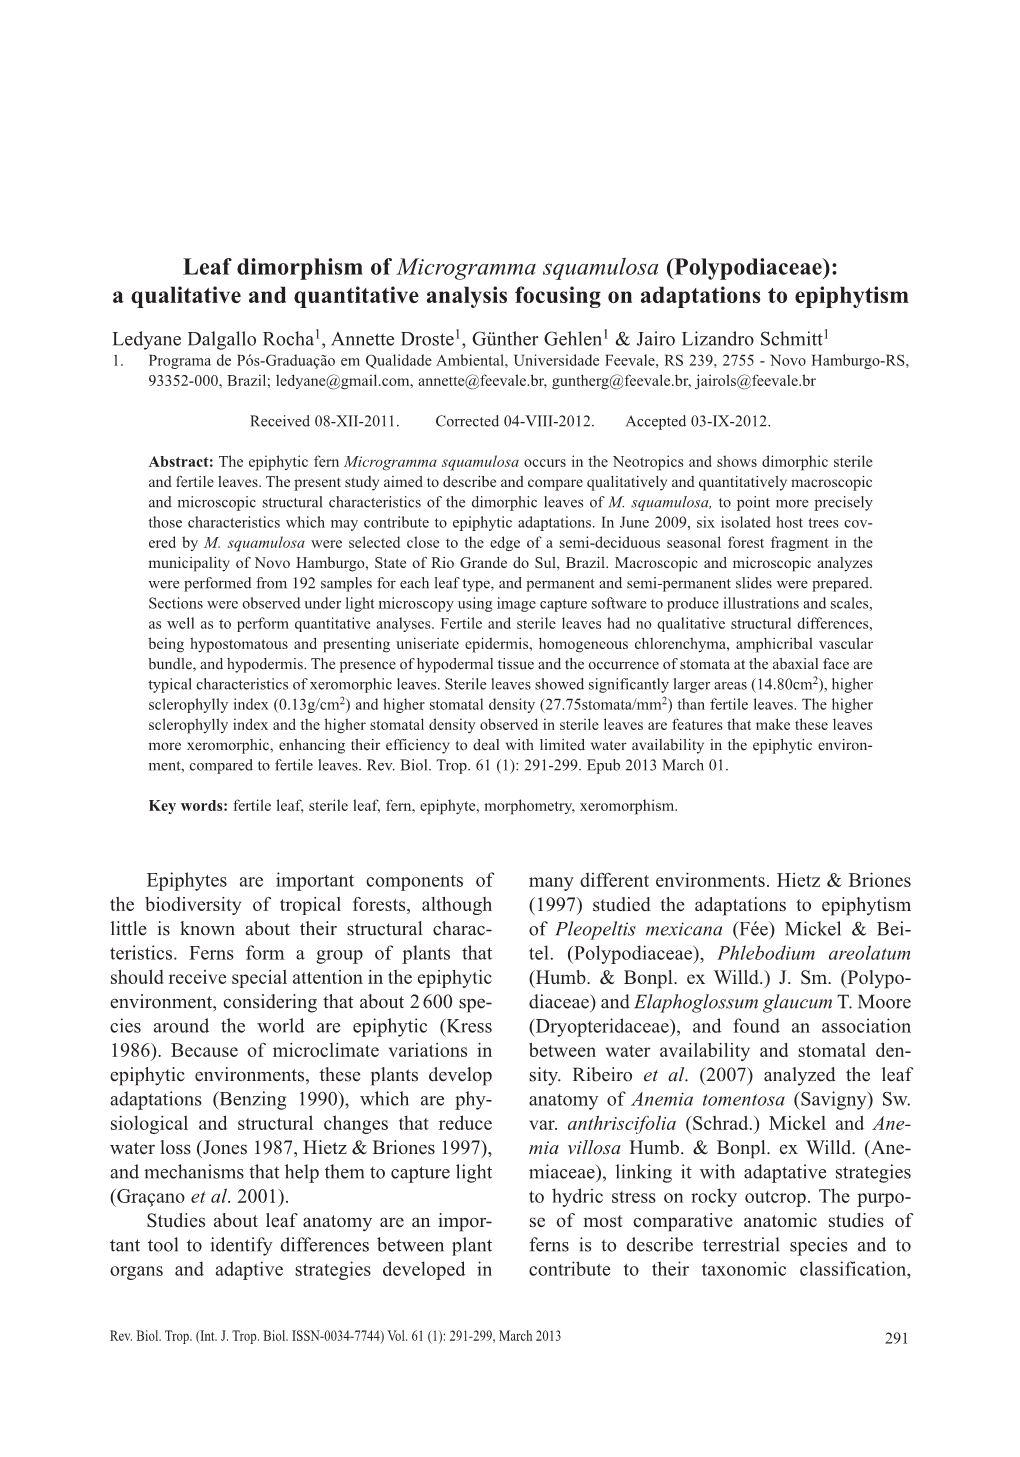 Leaf Dimorphism of Microgramma Squamulosa (Polypodiaceae): a Qualitative and Quantitative Analysis Focusing on Adaptations to Epiphytism